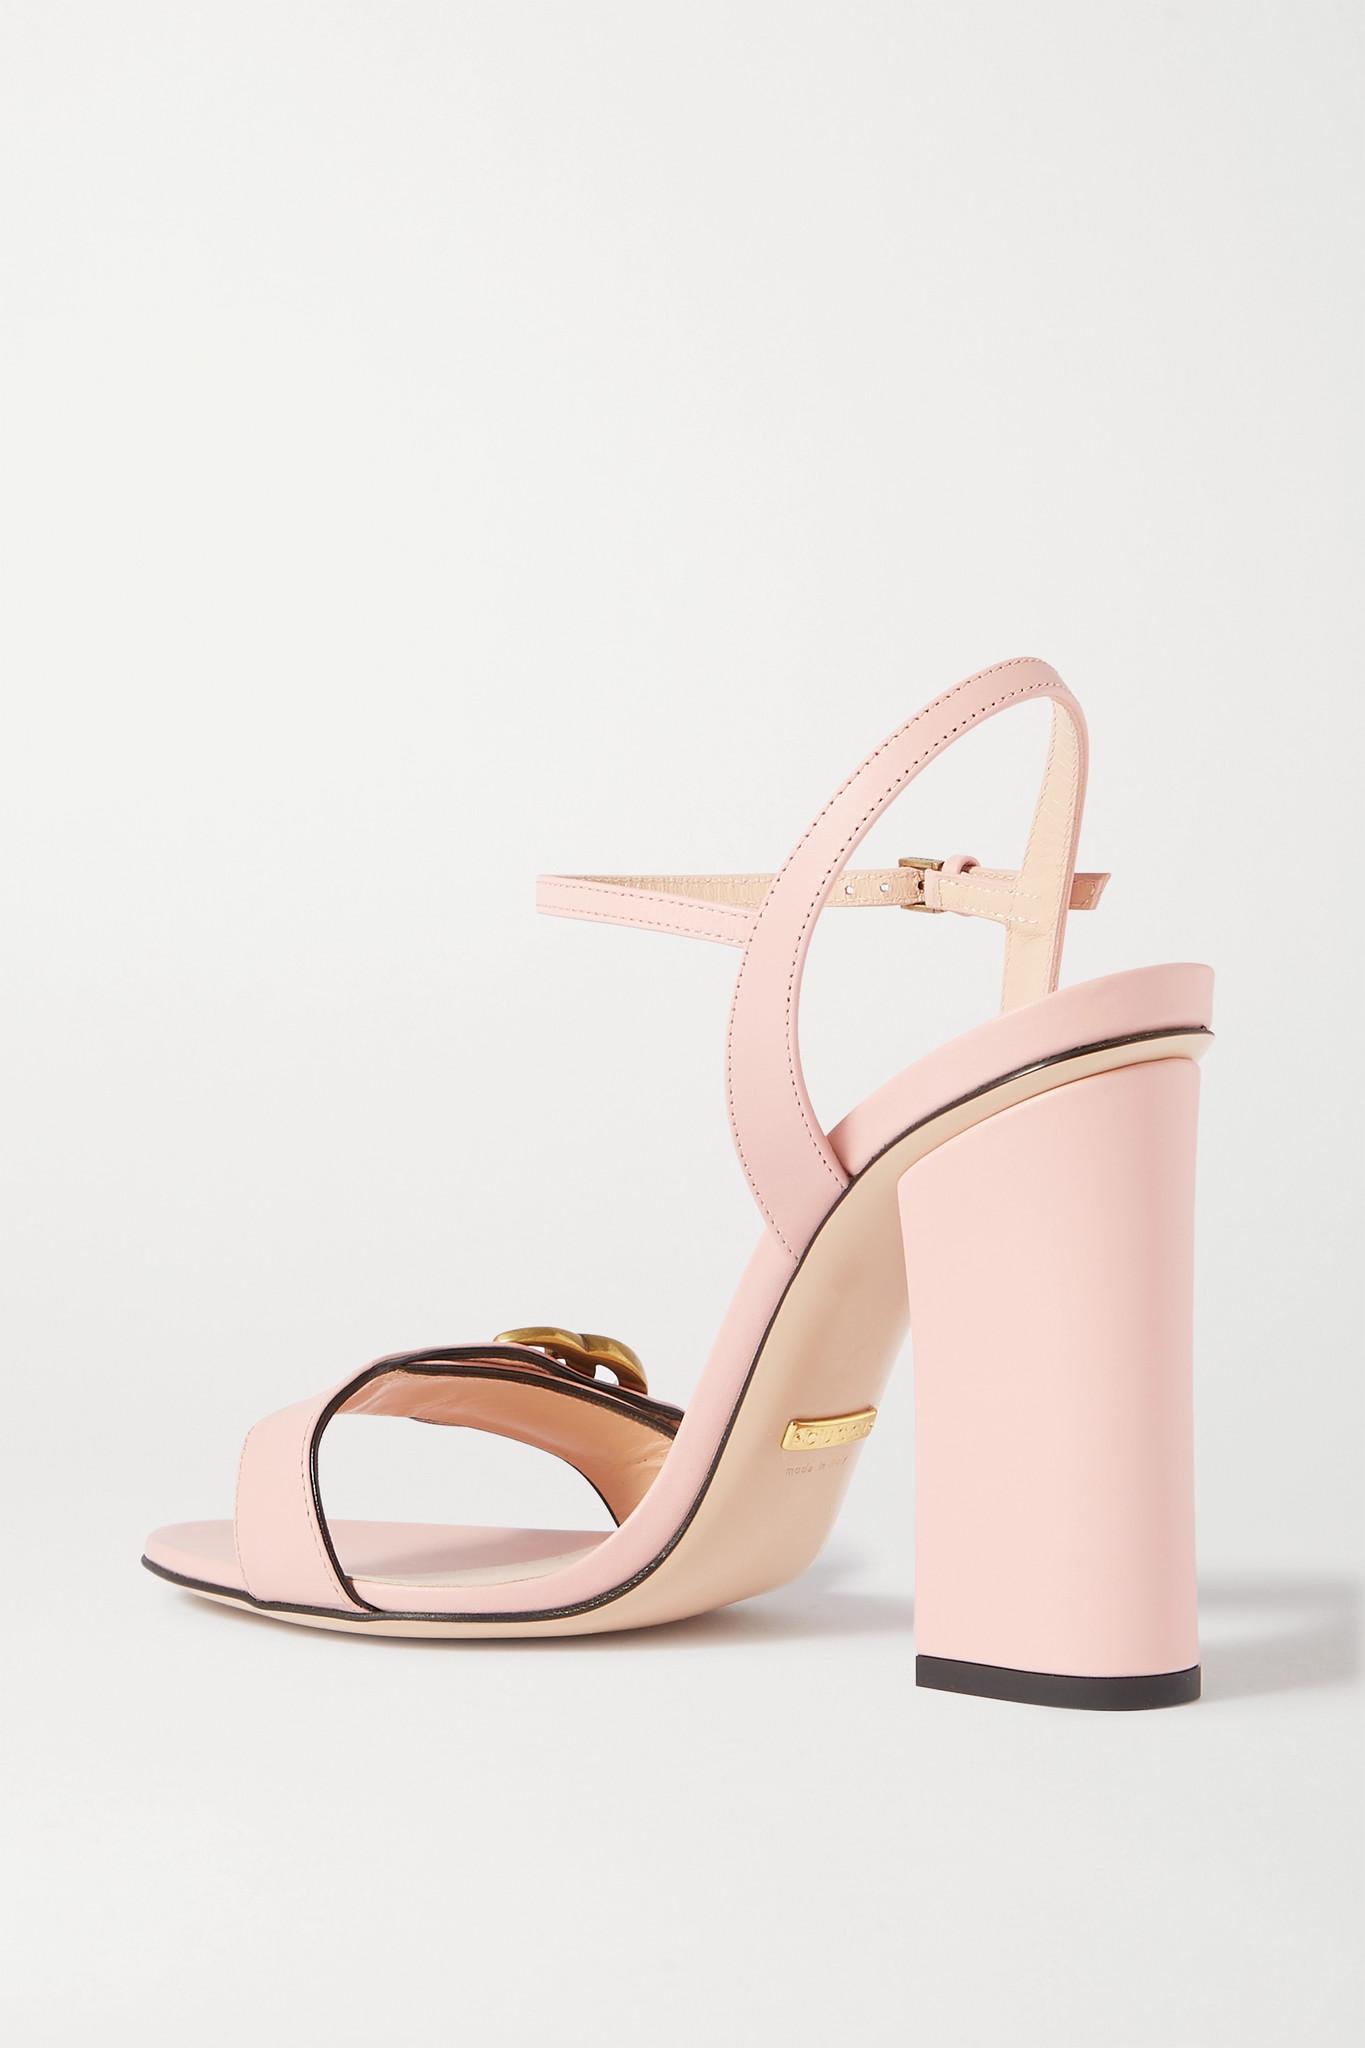 Authentic Gucci GG Marmont Leather Platform Wedge Sandals Sz EU 40/8.5-9 US  Pink